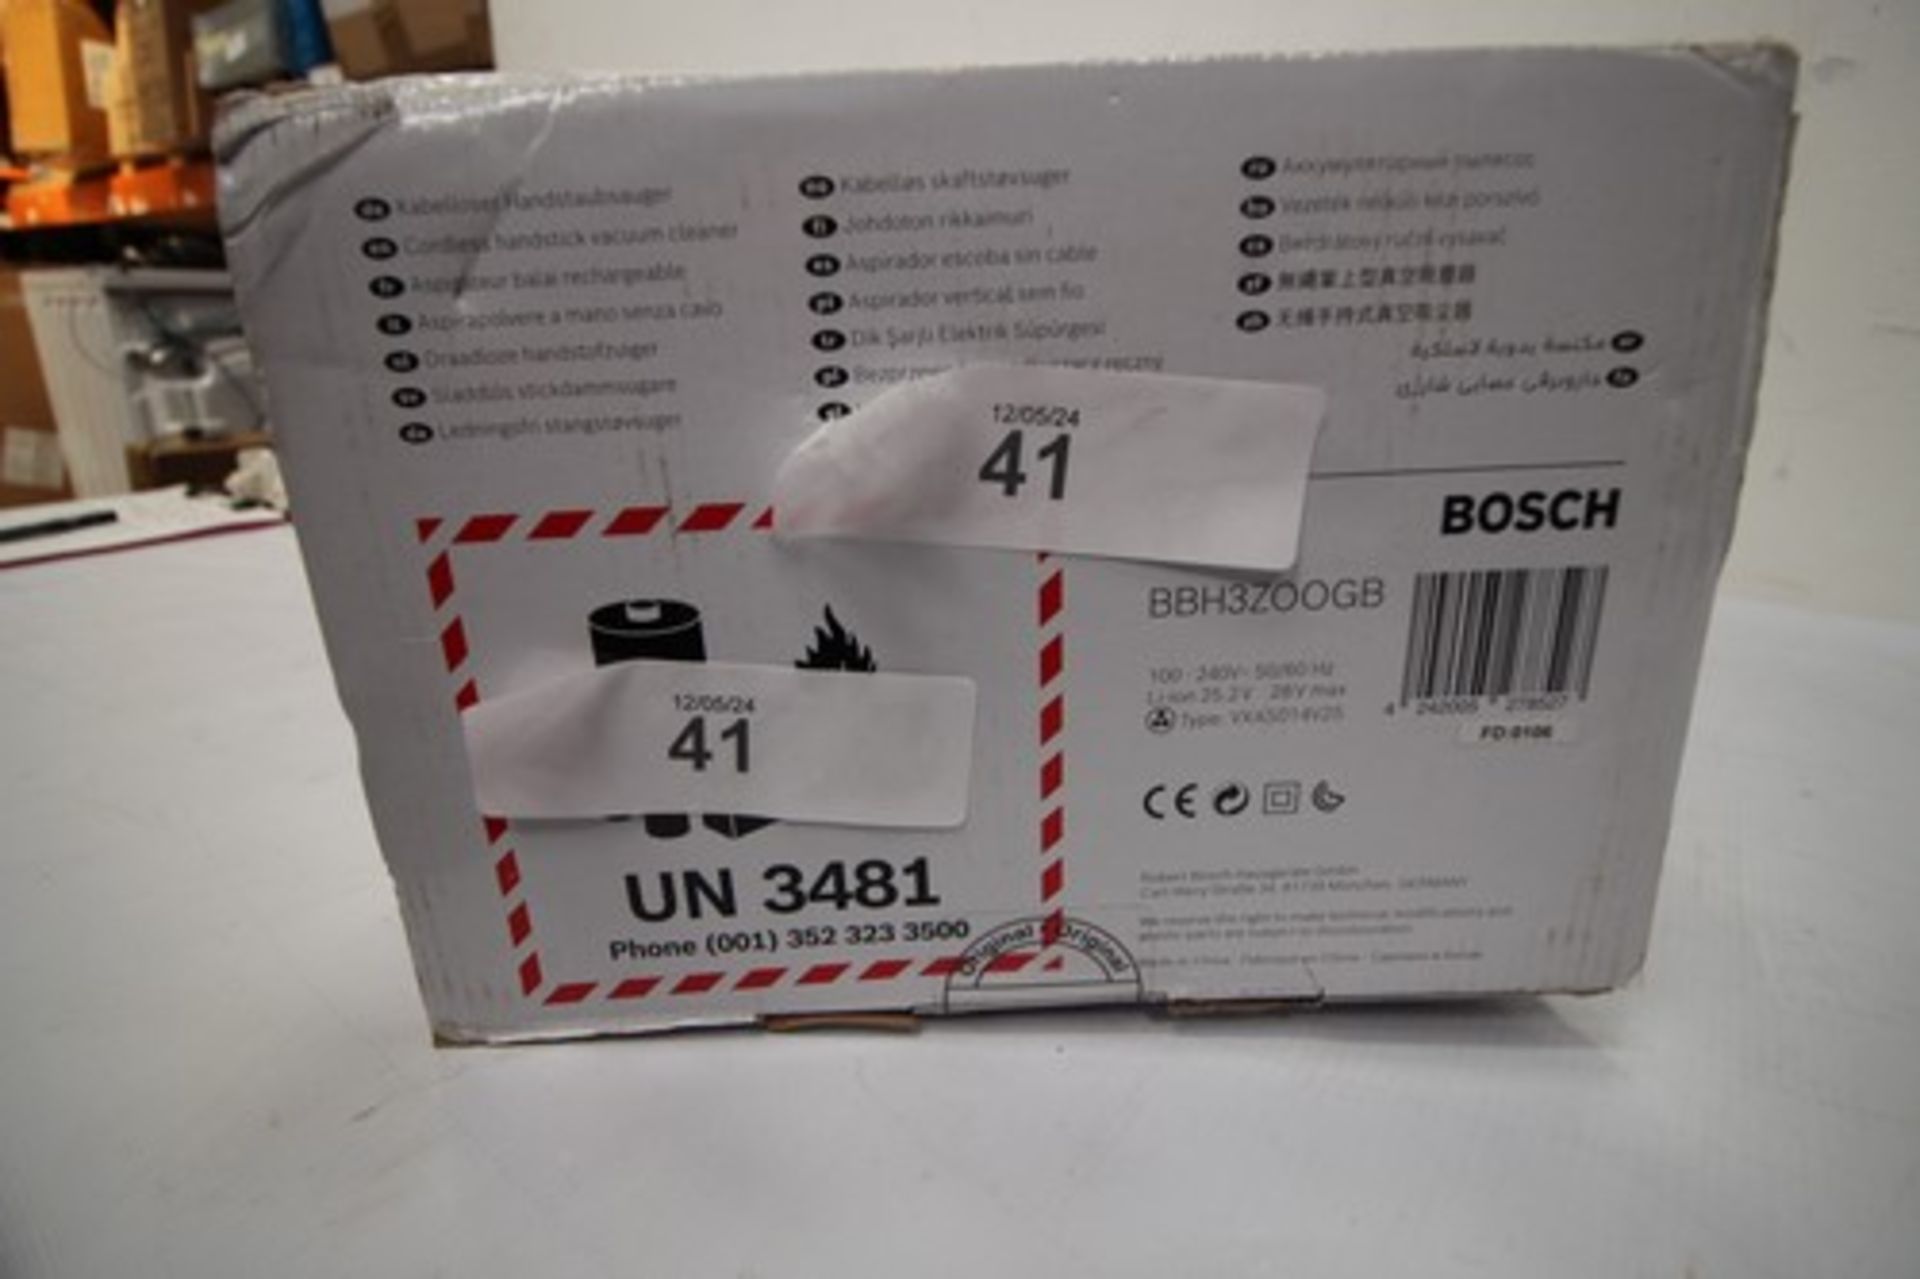 1 x Bosch Flexxo Gen 2 series 4 vacuum, model No: BBH3Z00GB - new in tatty box (ES5) - Image 2 of 2